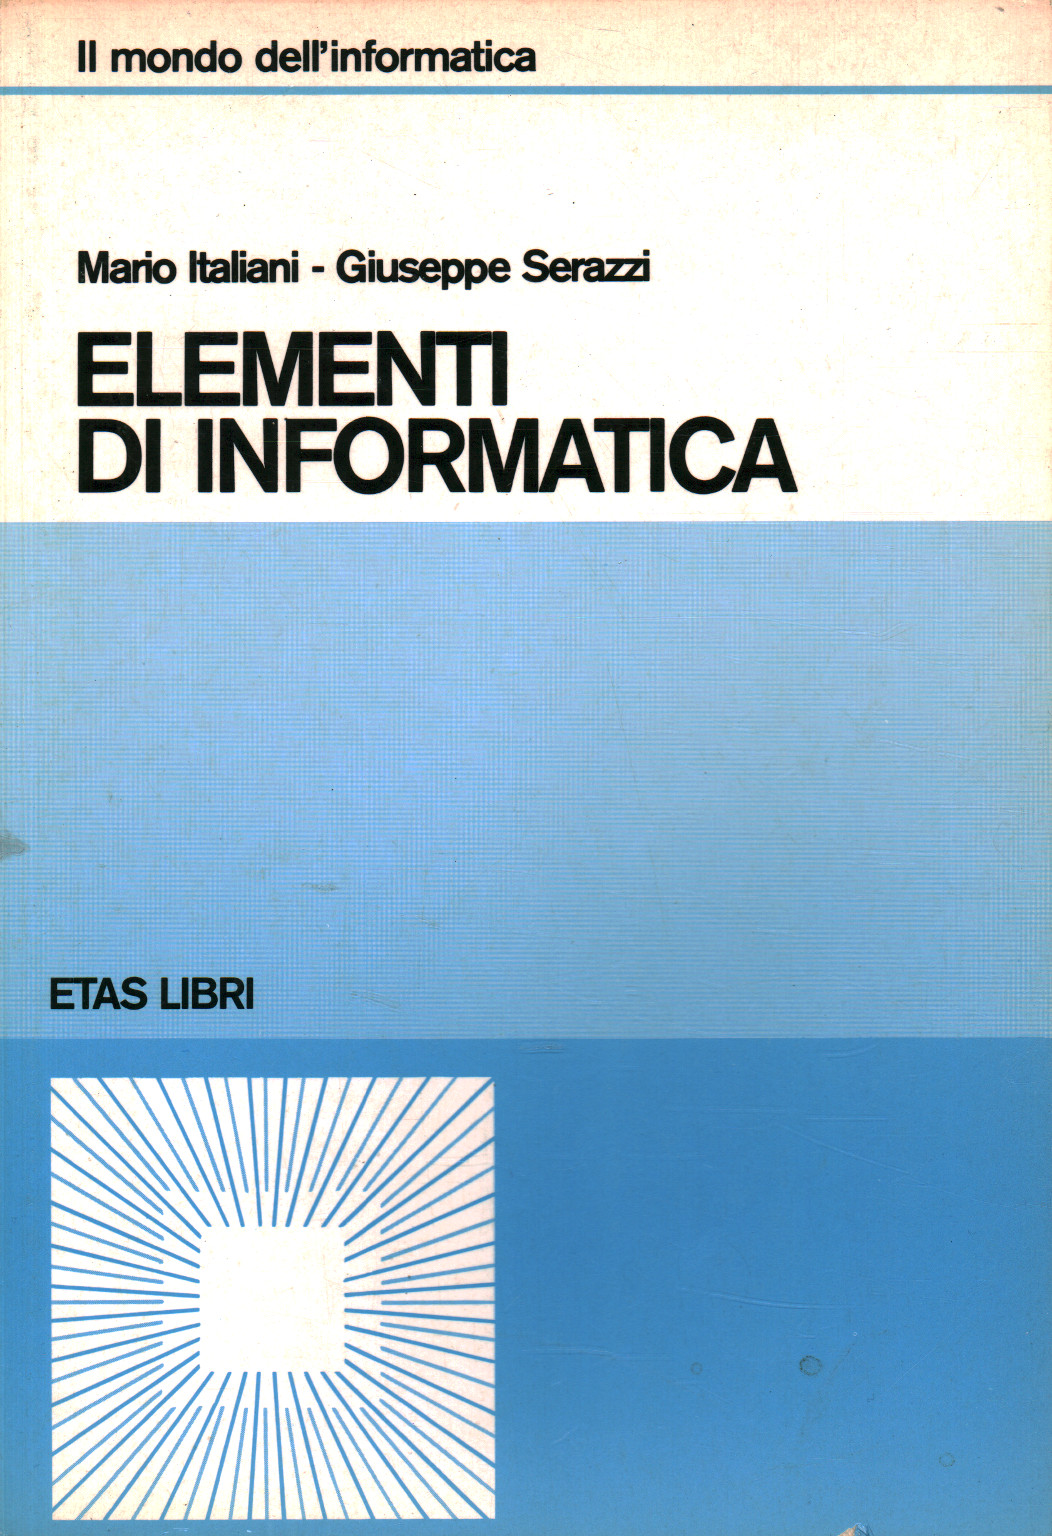 Elements of computer science, M. Italian G. Serazzi